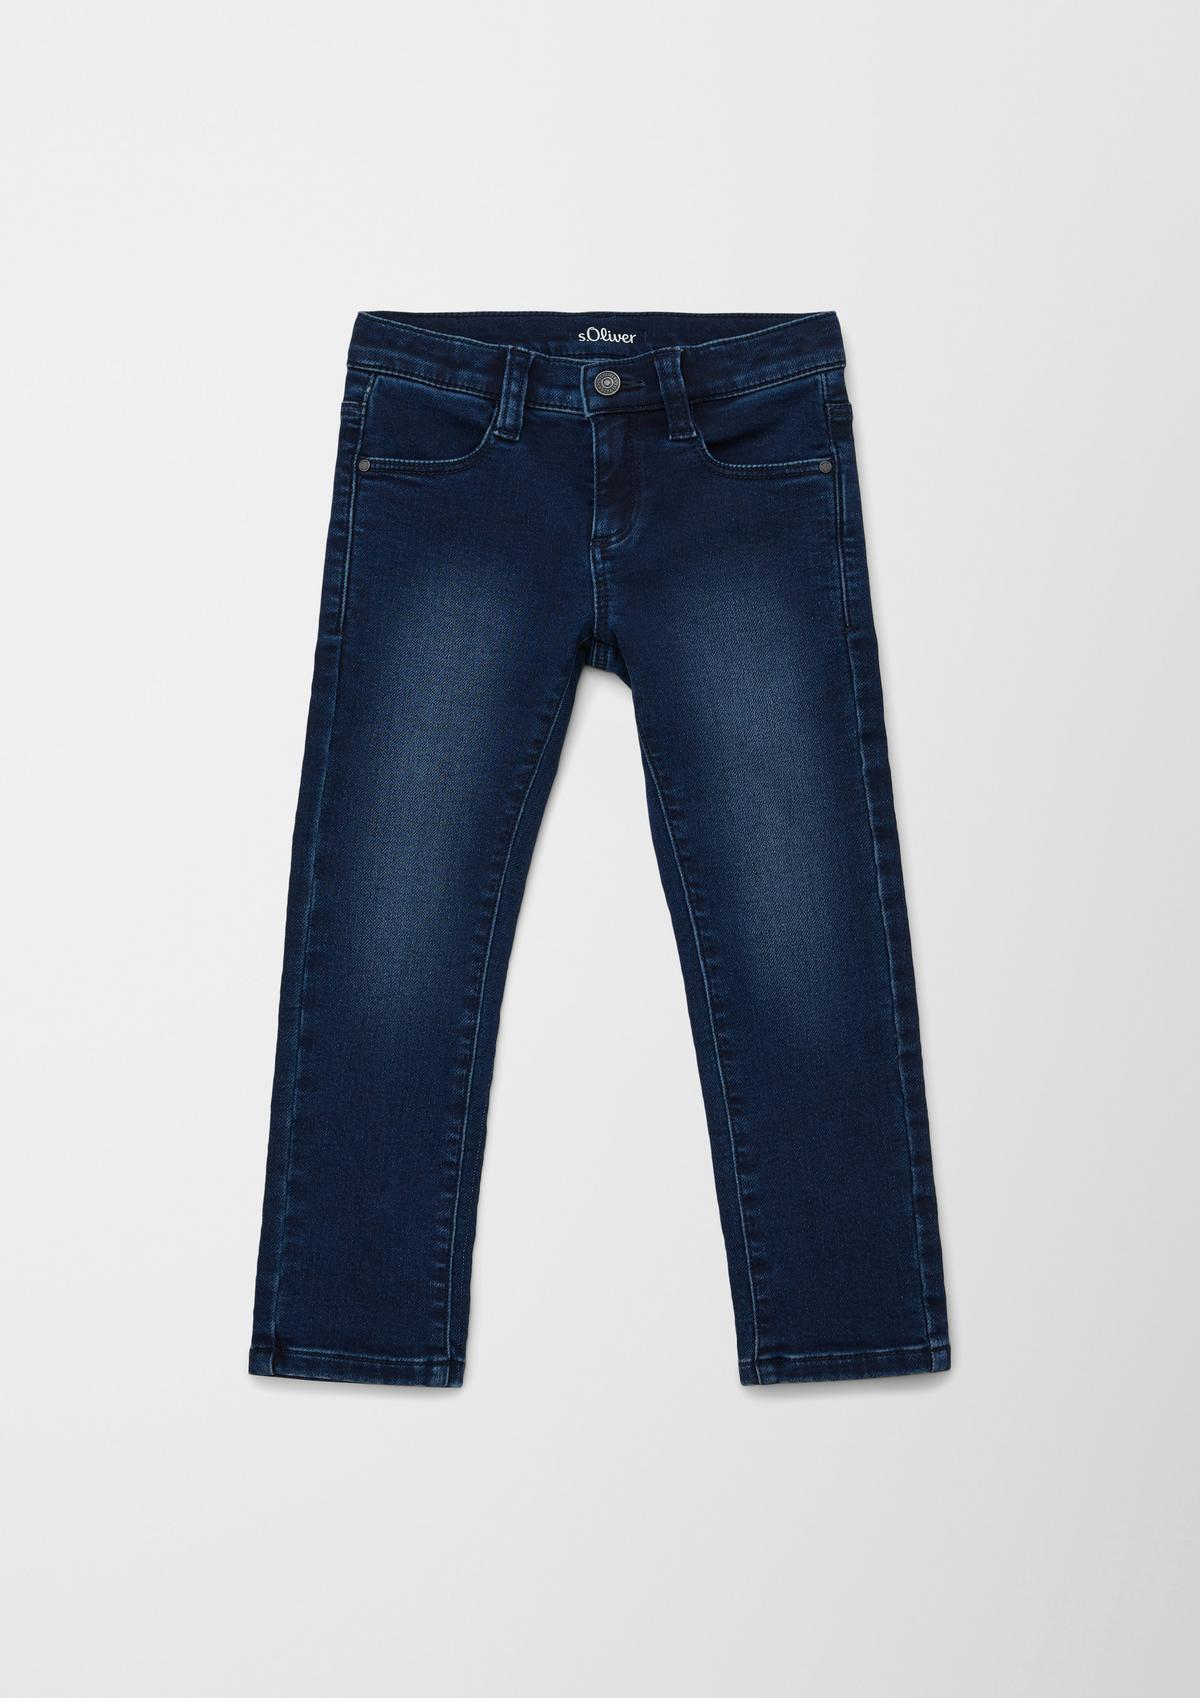 Jeans Brad / slim fit / mid rise / slim leg